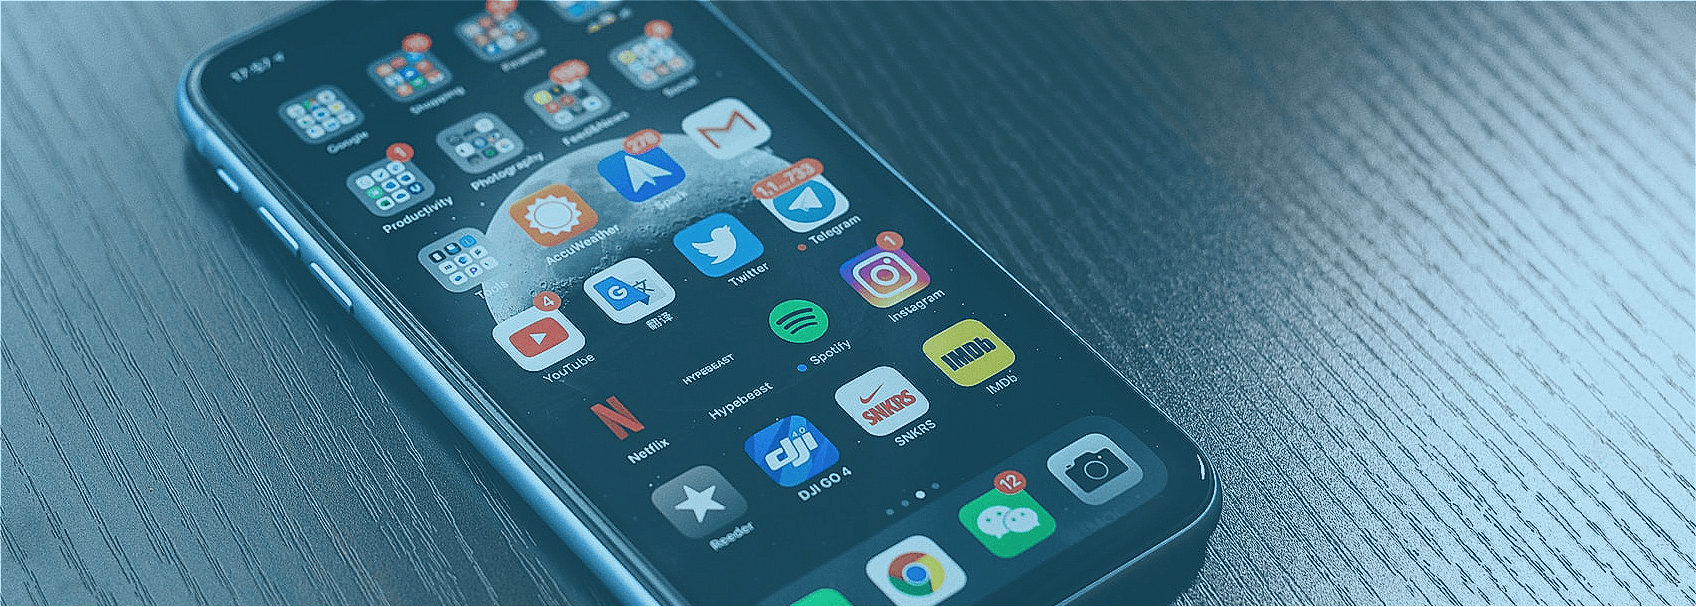 Beste mobile apps voor ondernemers cover